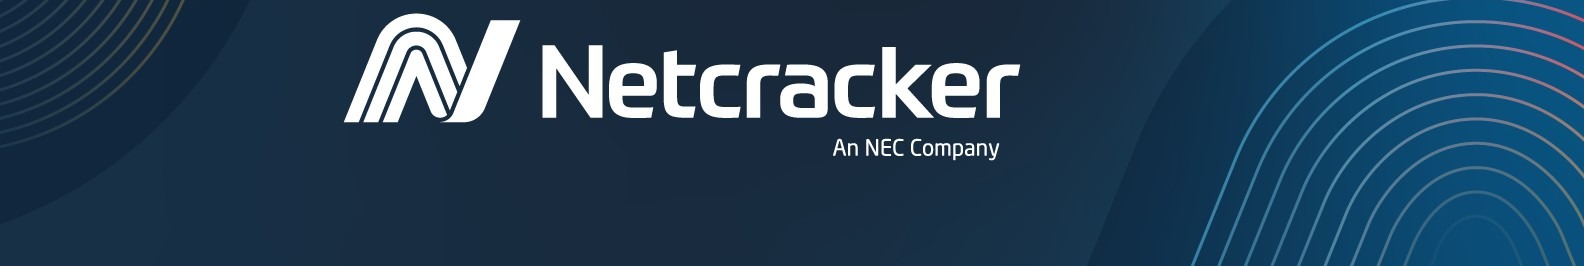 Netcracker background